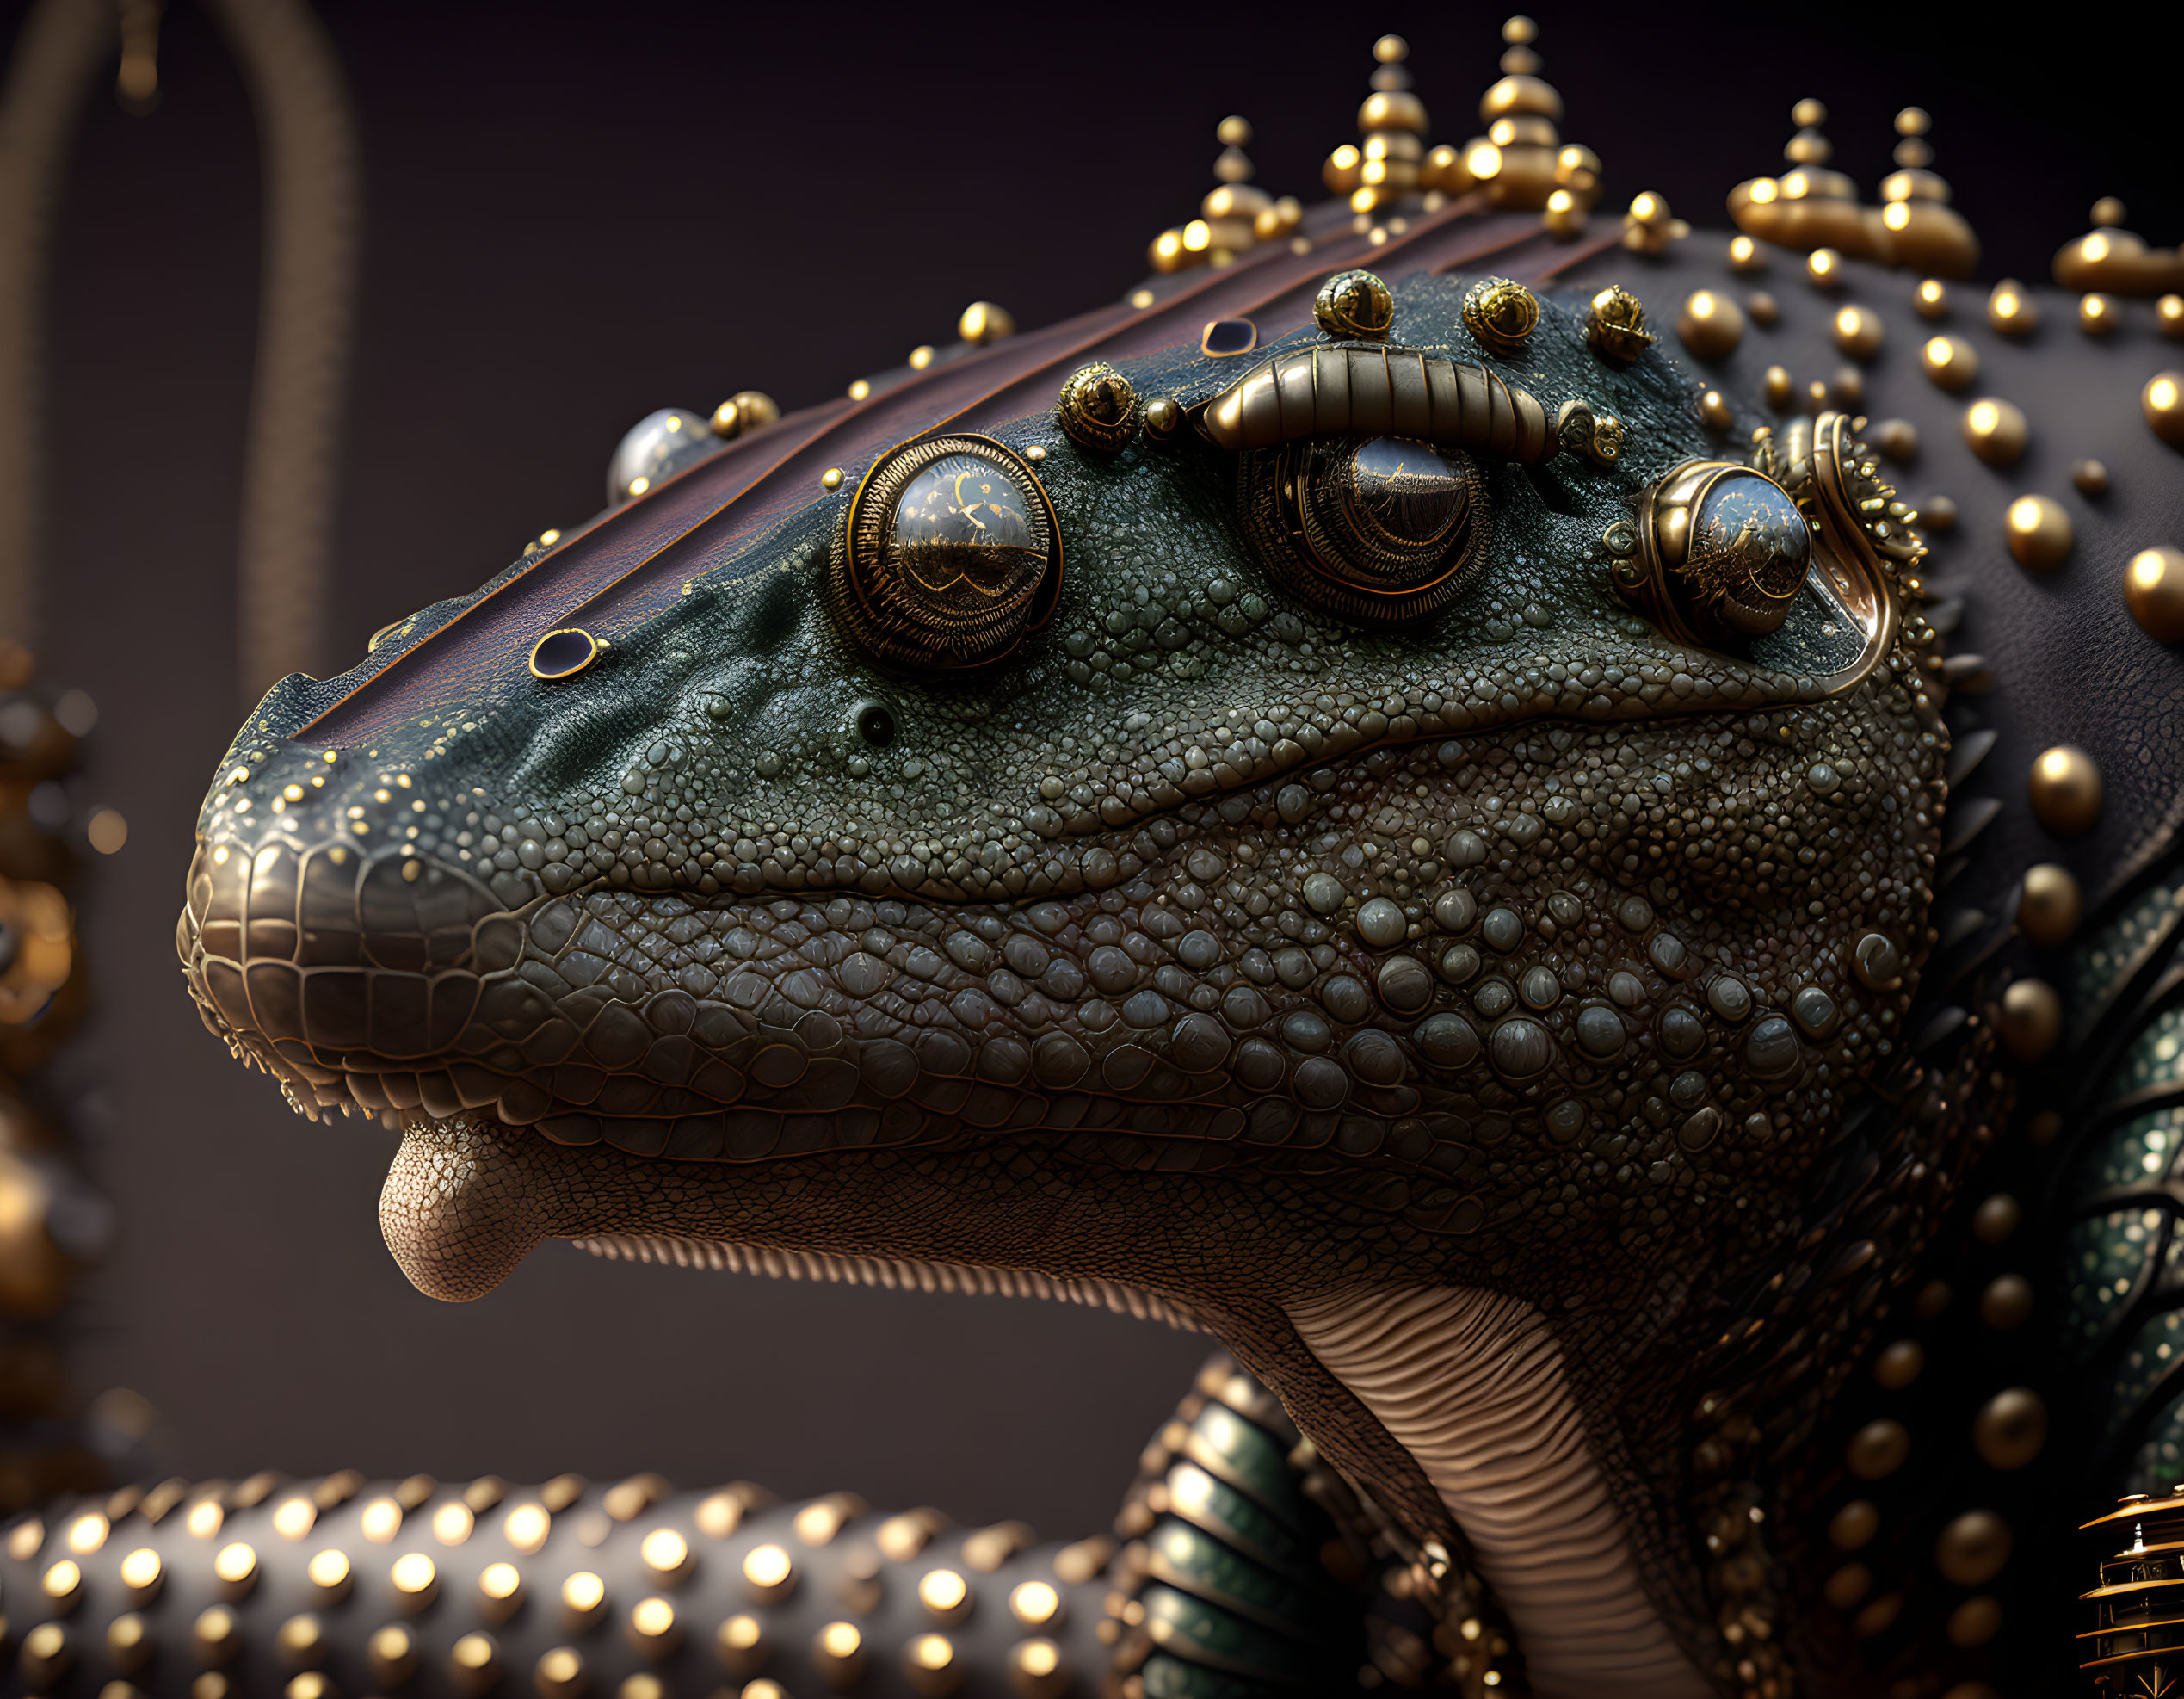 Surreal digital artwork: reptilian creature with glistening eyes & golden embellishments